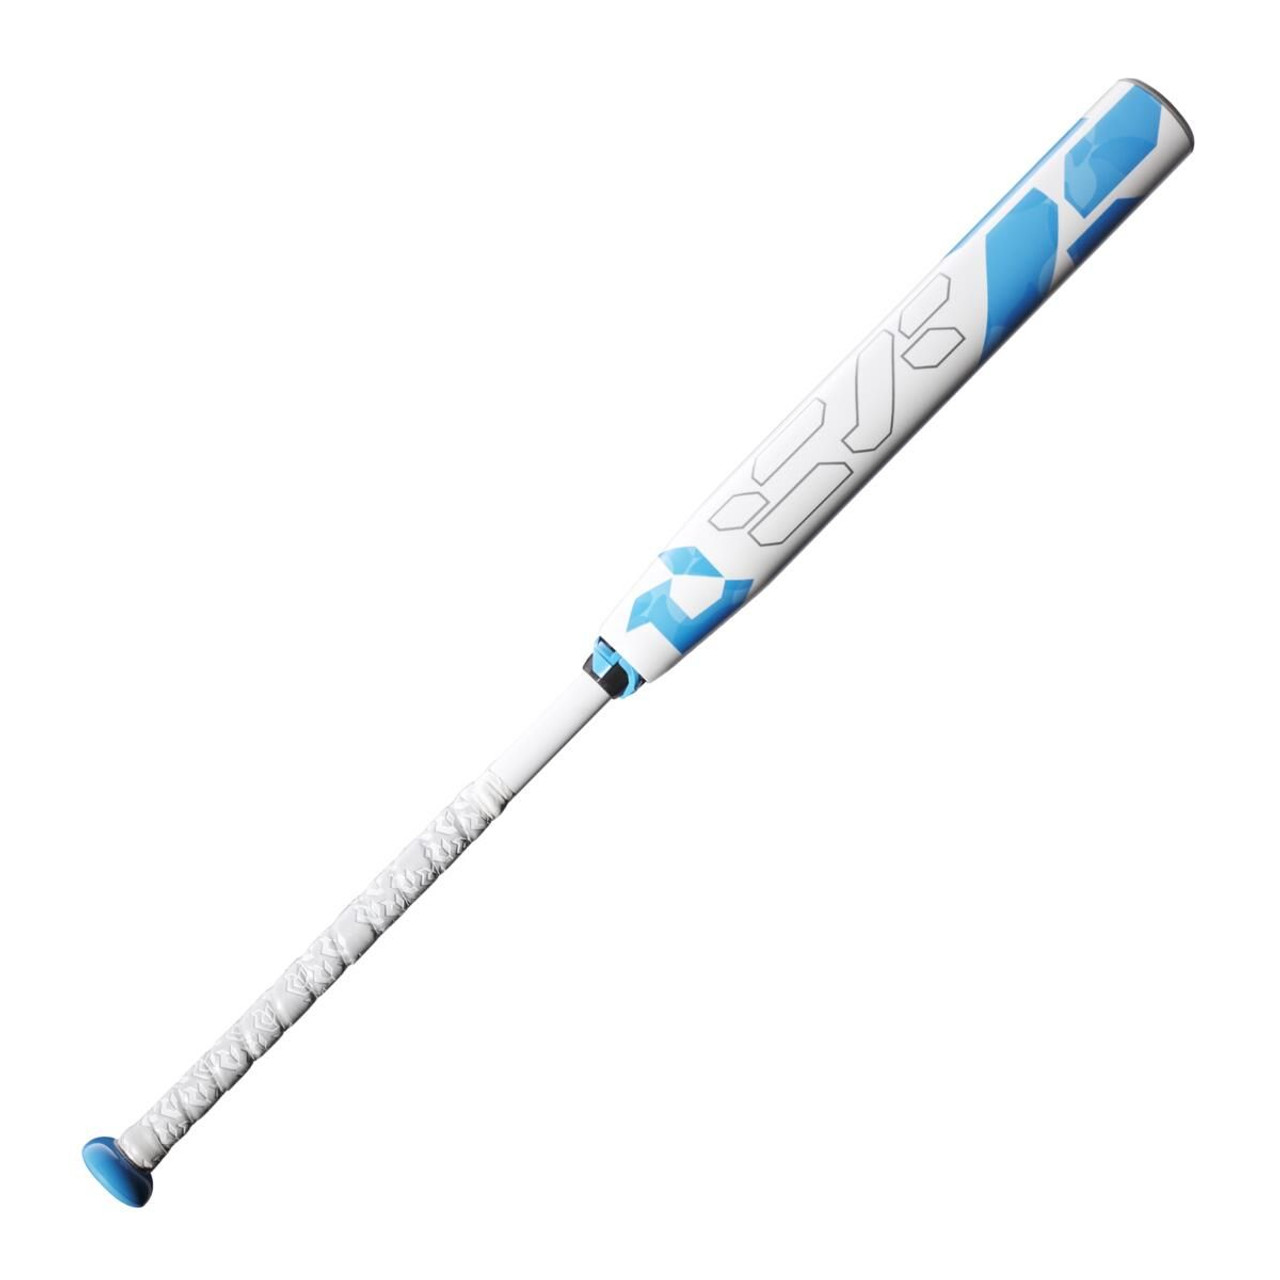 New LOUISVILLE SLUGGER PROVEN 30 17oz -13 fastpitch softball bat